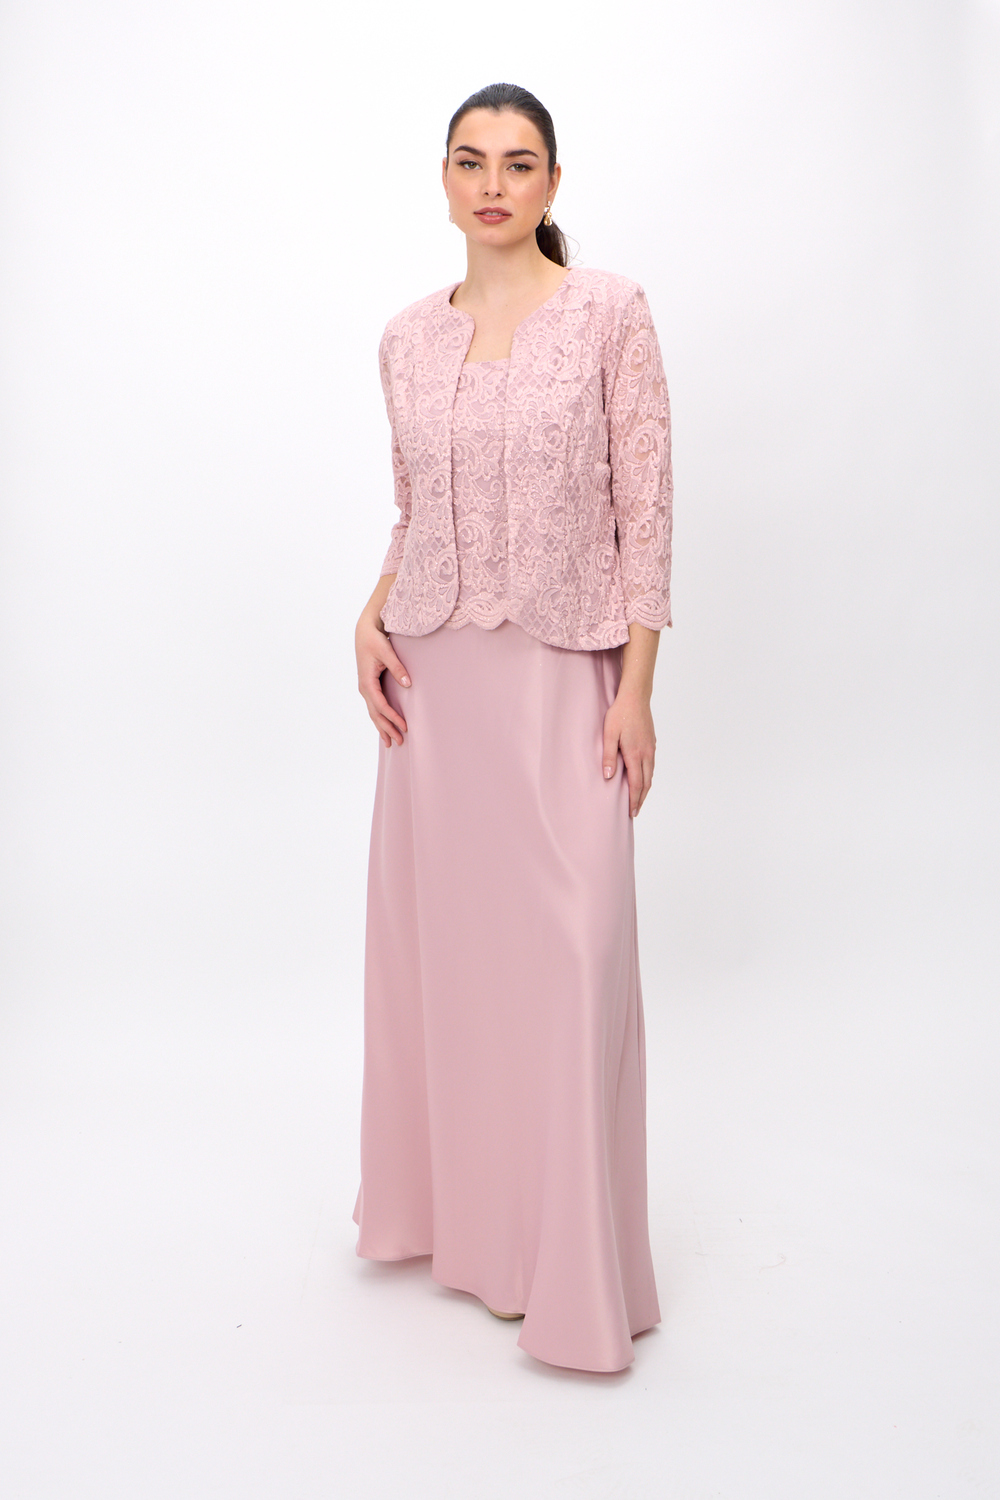 Long Lace & Satin Jacket Dress Style 81122326. Blush